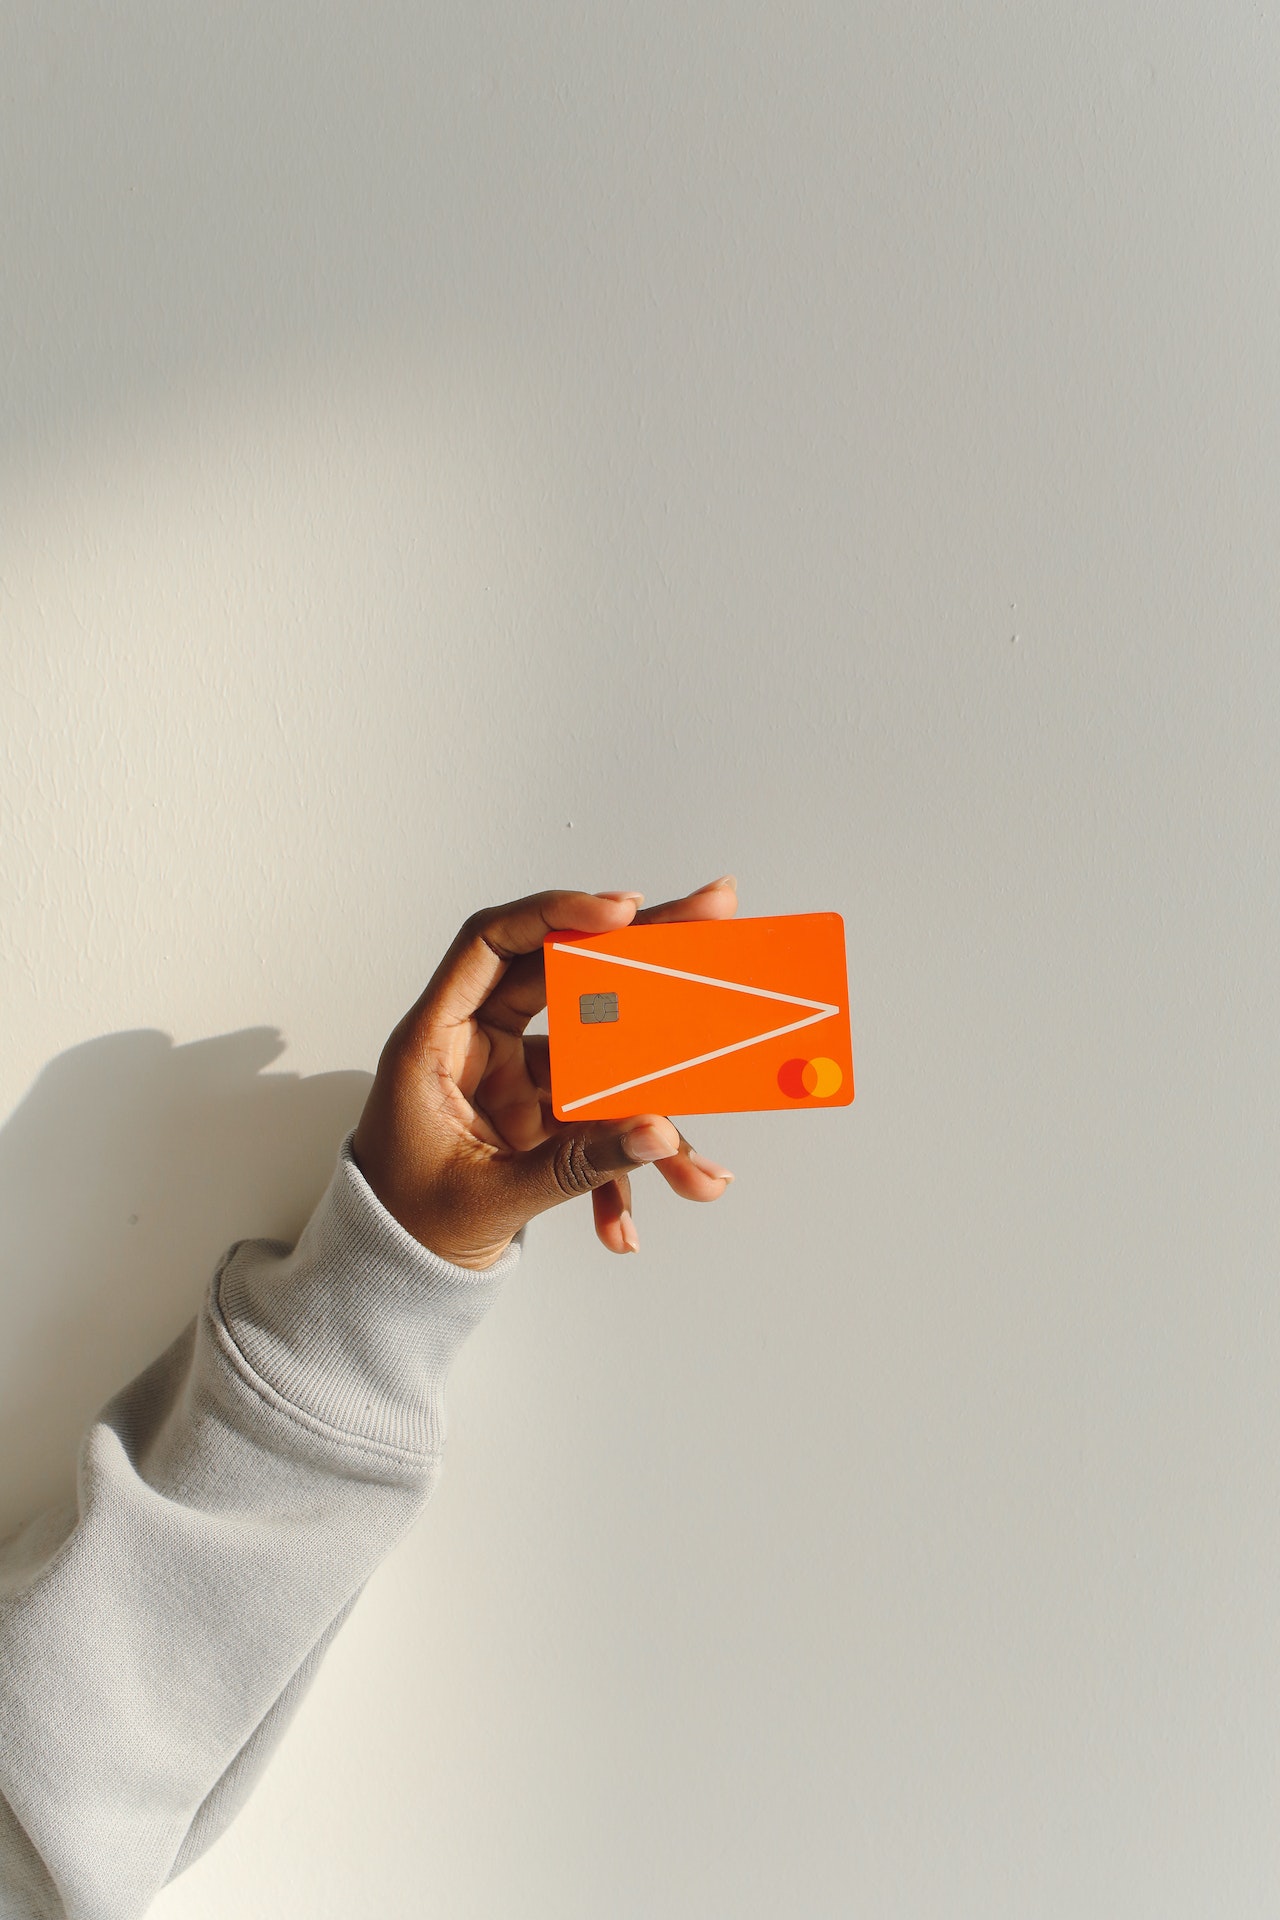 Buy Smartlox With A Debit Card